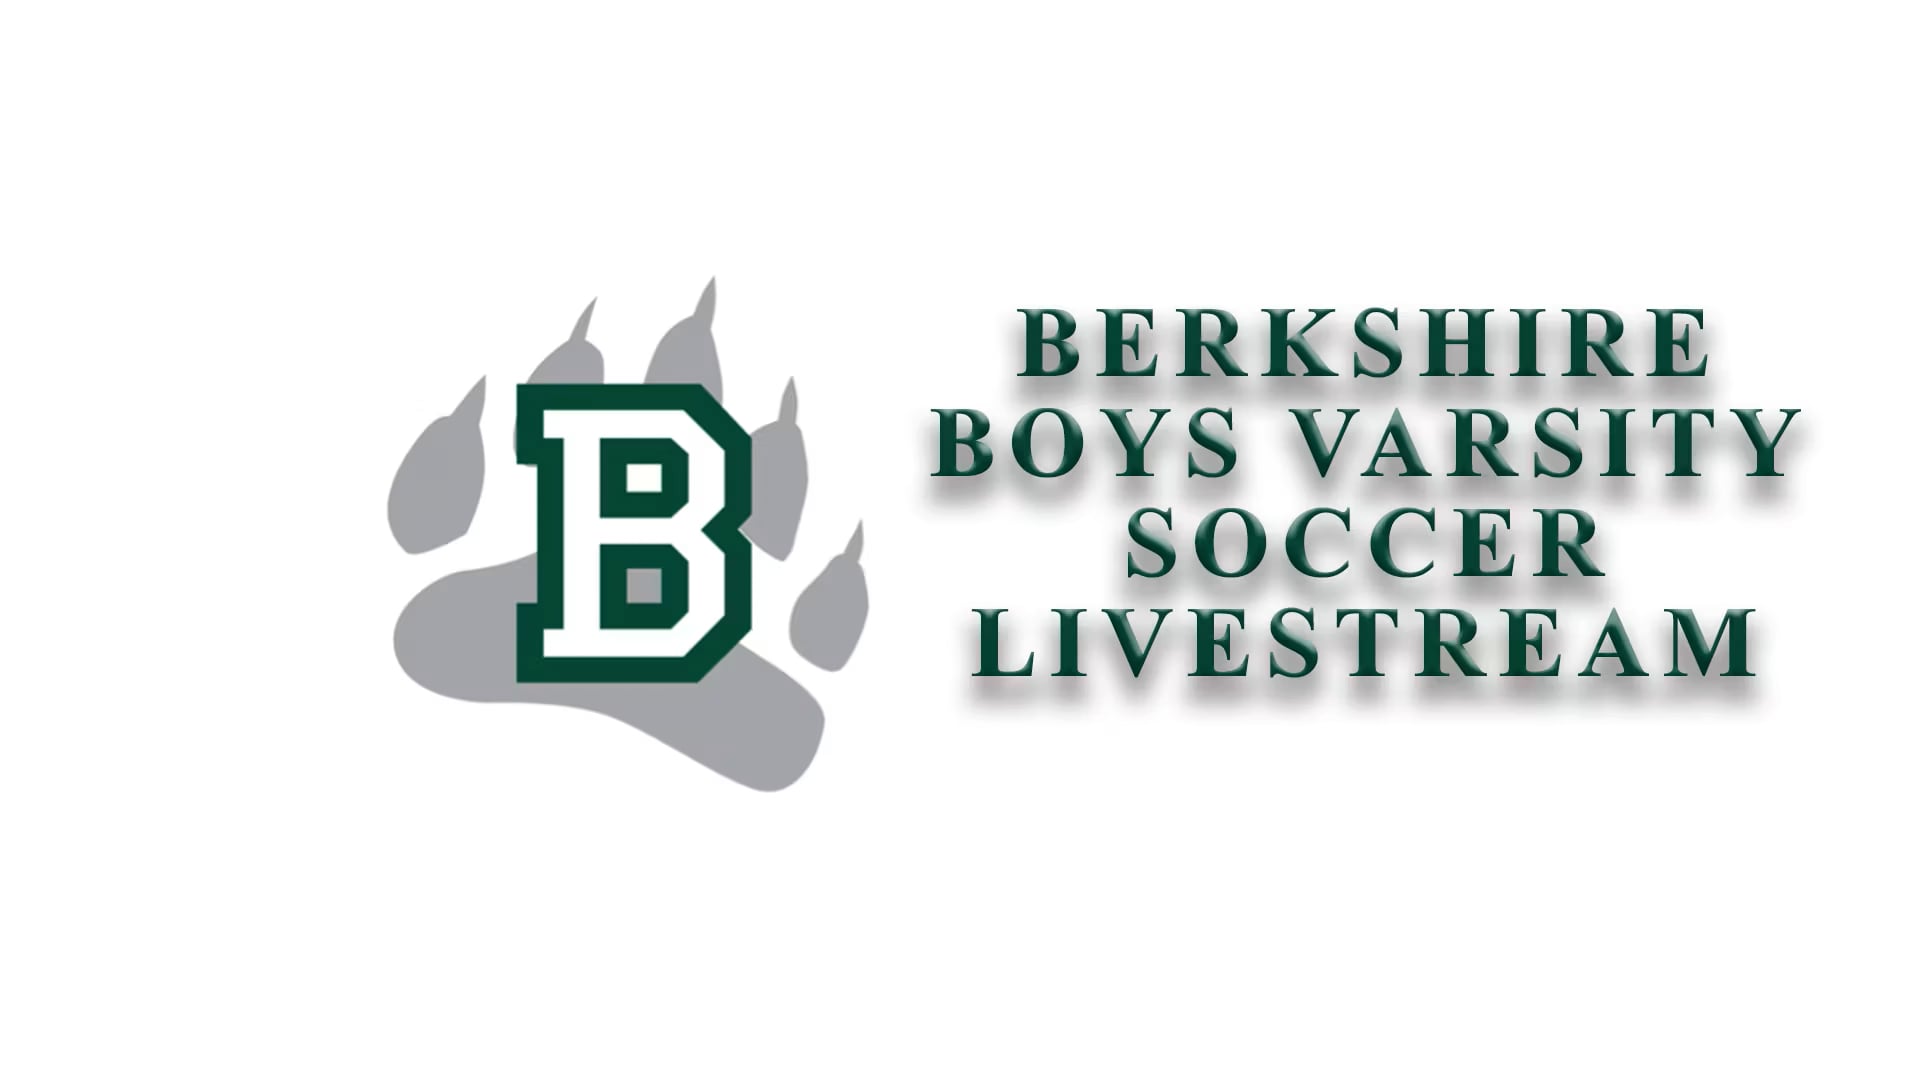 Berkshire Boys Varsity Soccer Livestream on Vimeo